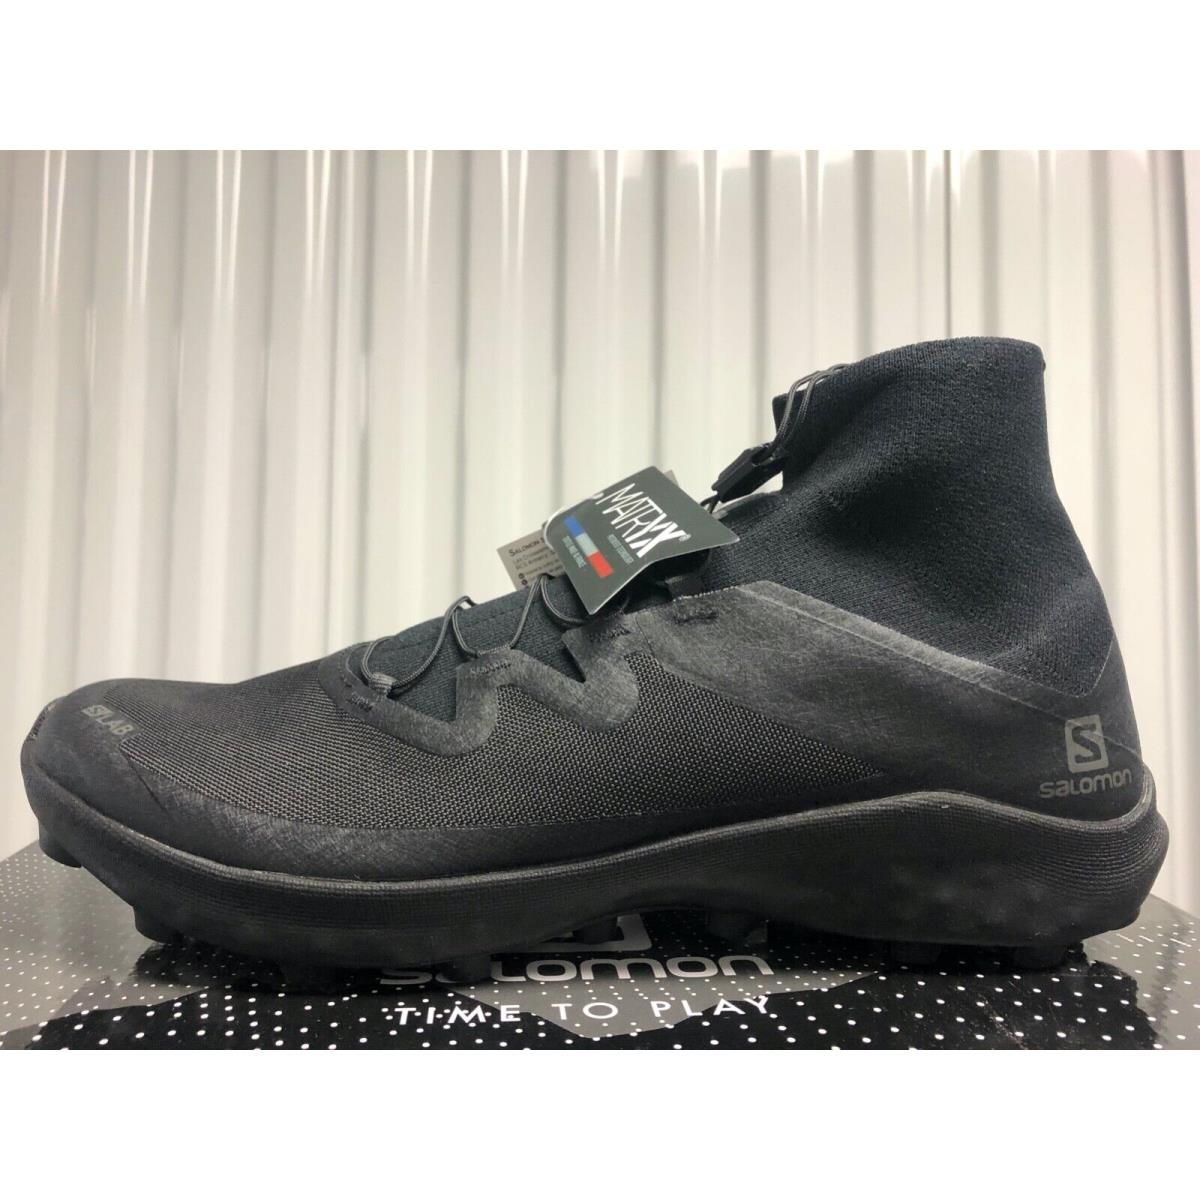 Salomon S/lab Cross Ltd Limited Black 11.5 413669 Trail Running Shoe Hike